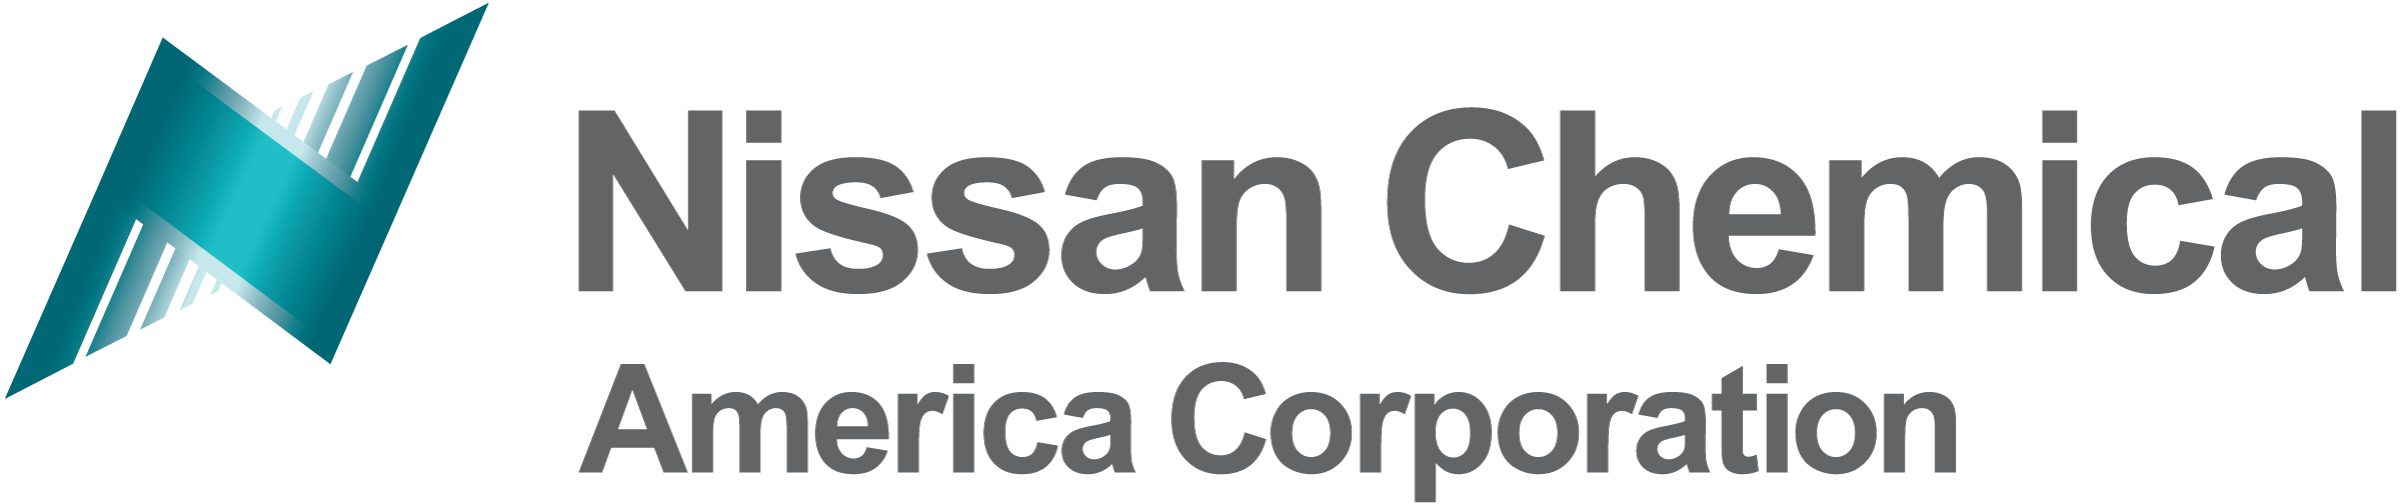 Nissan Chemical America Corporation